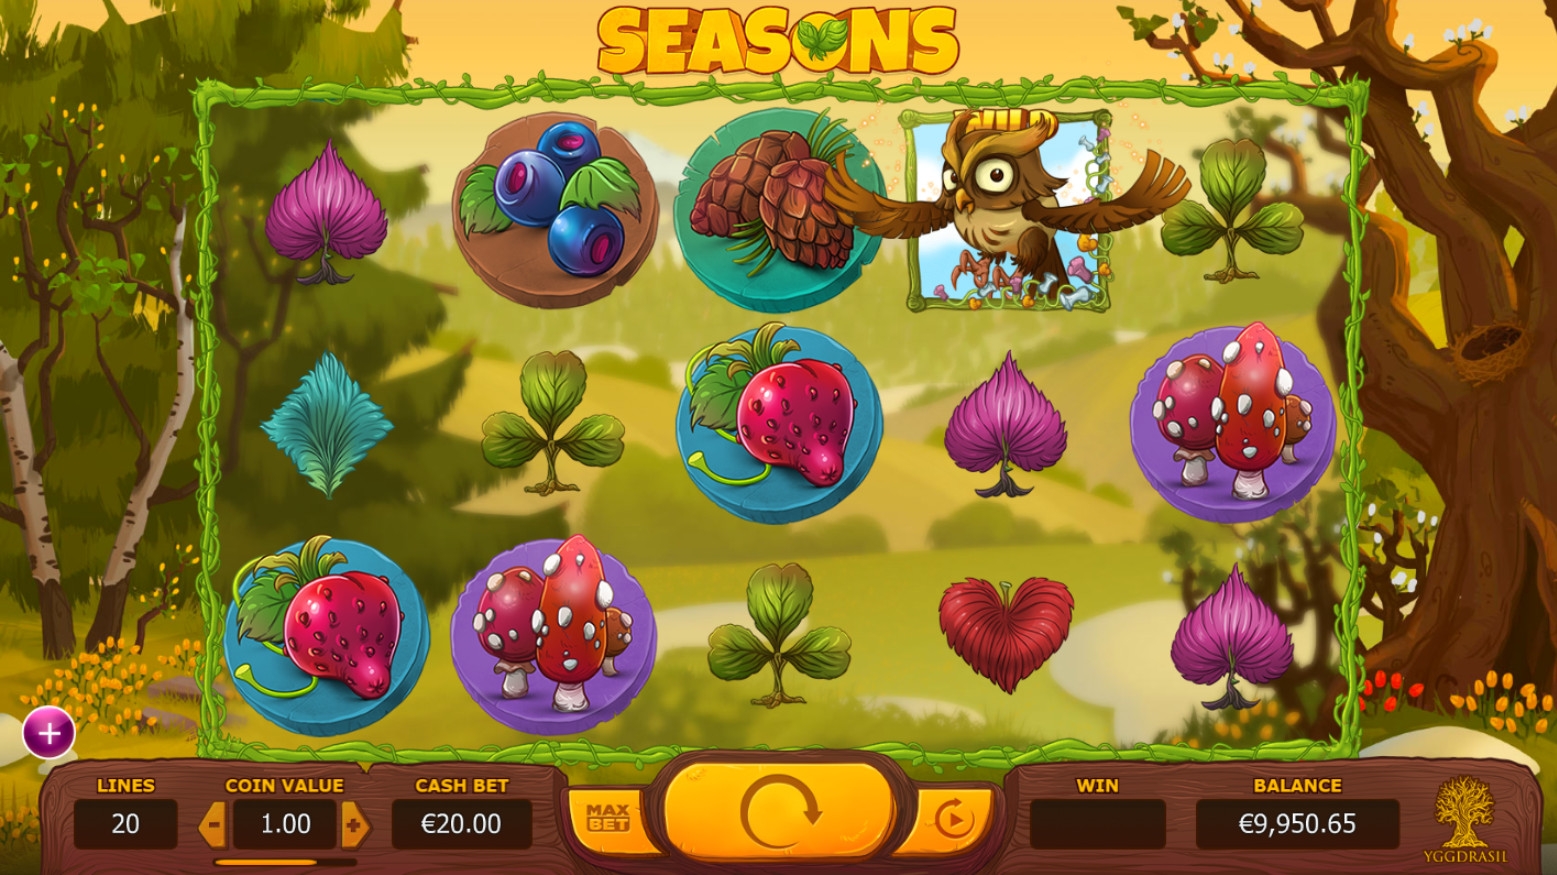 Seasons (Seasons) from category Slots